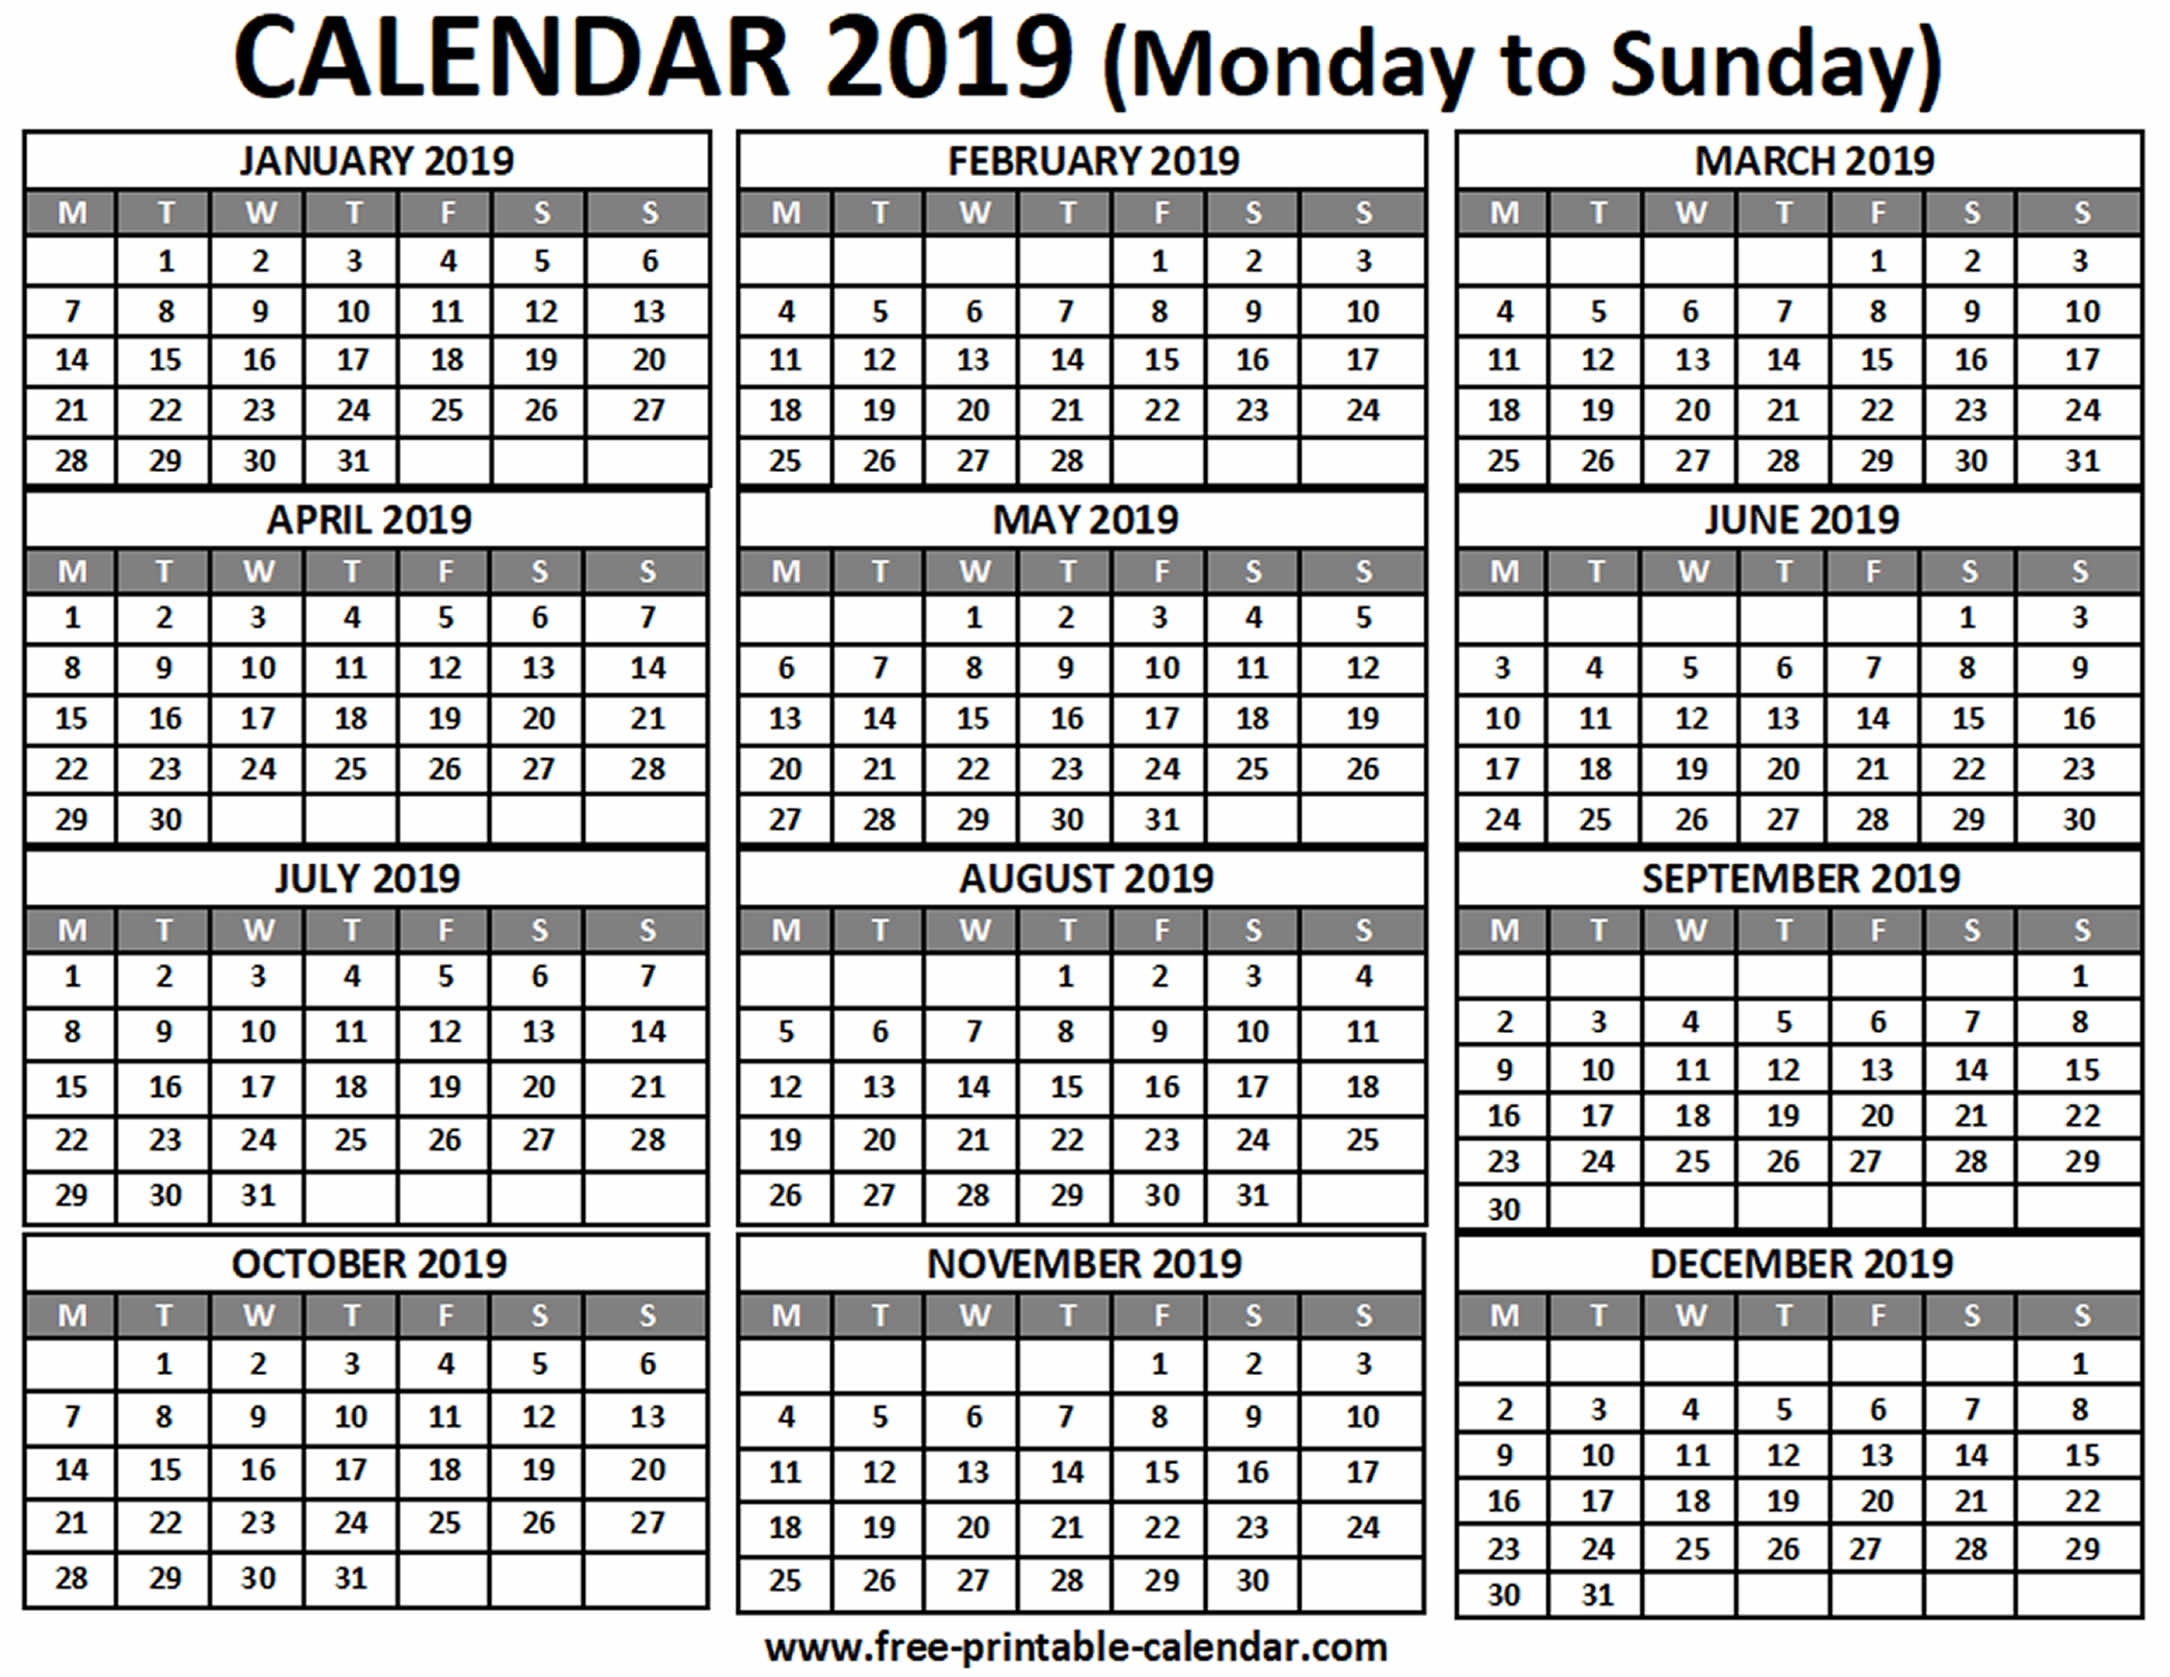 2019 Calendar - Free-Printable-Calendar Free Monthly Calendars Starting On Monday